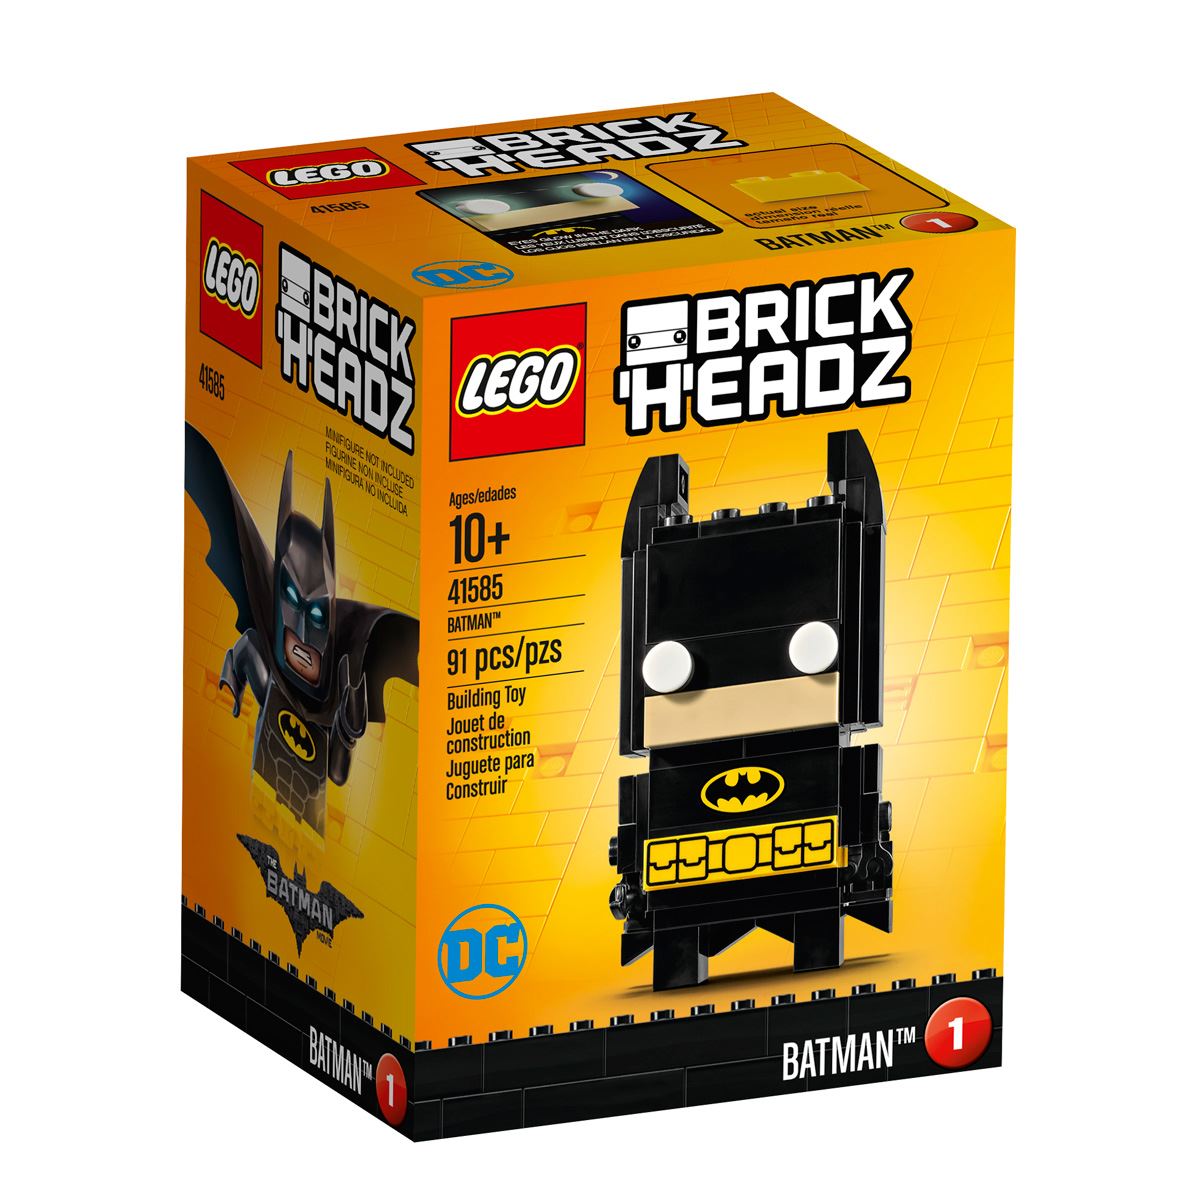 Brickheadz Batman